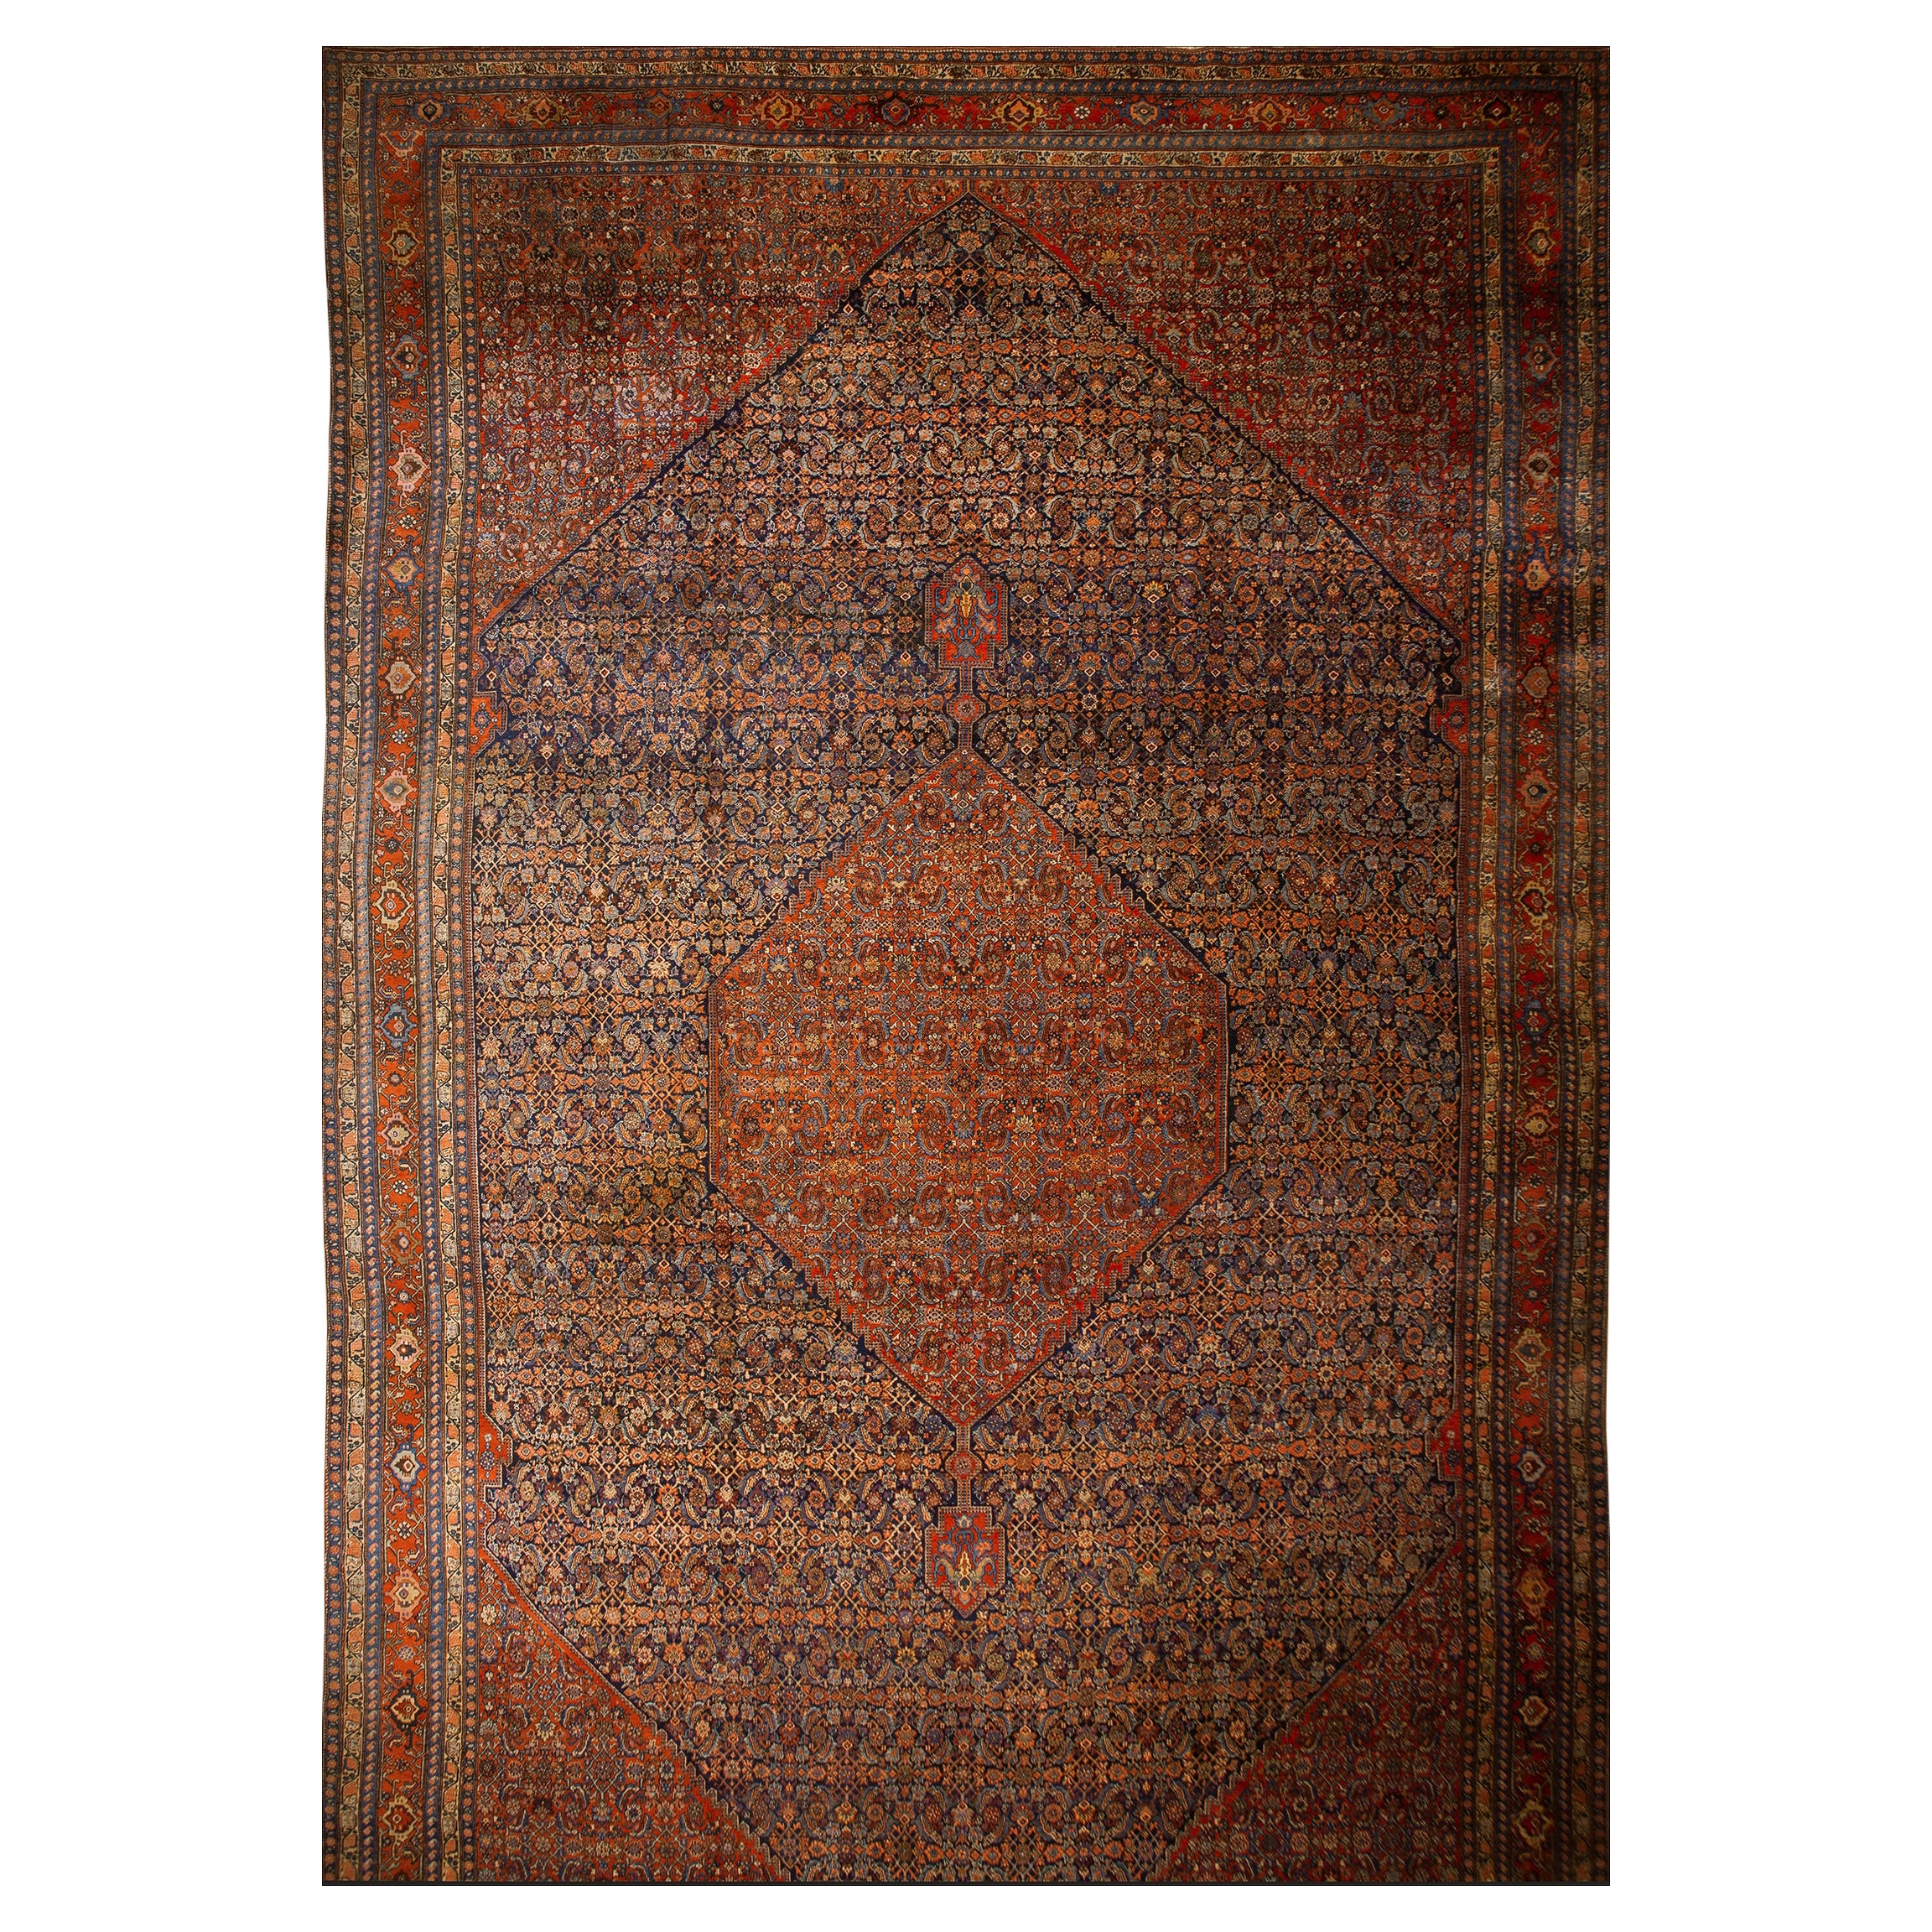 Early 20th Century W. Persian Bijar Carpet ( 14'6" x 26' - 442 x 793 )